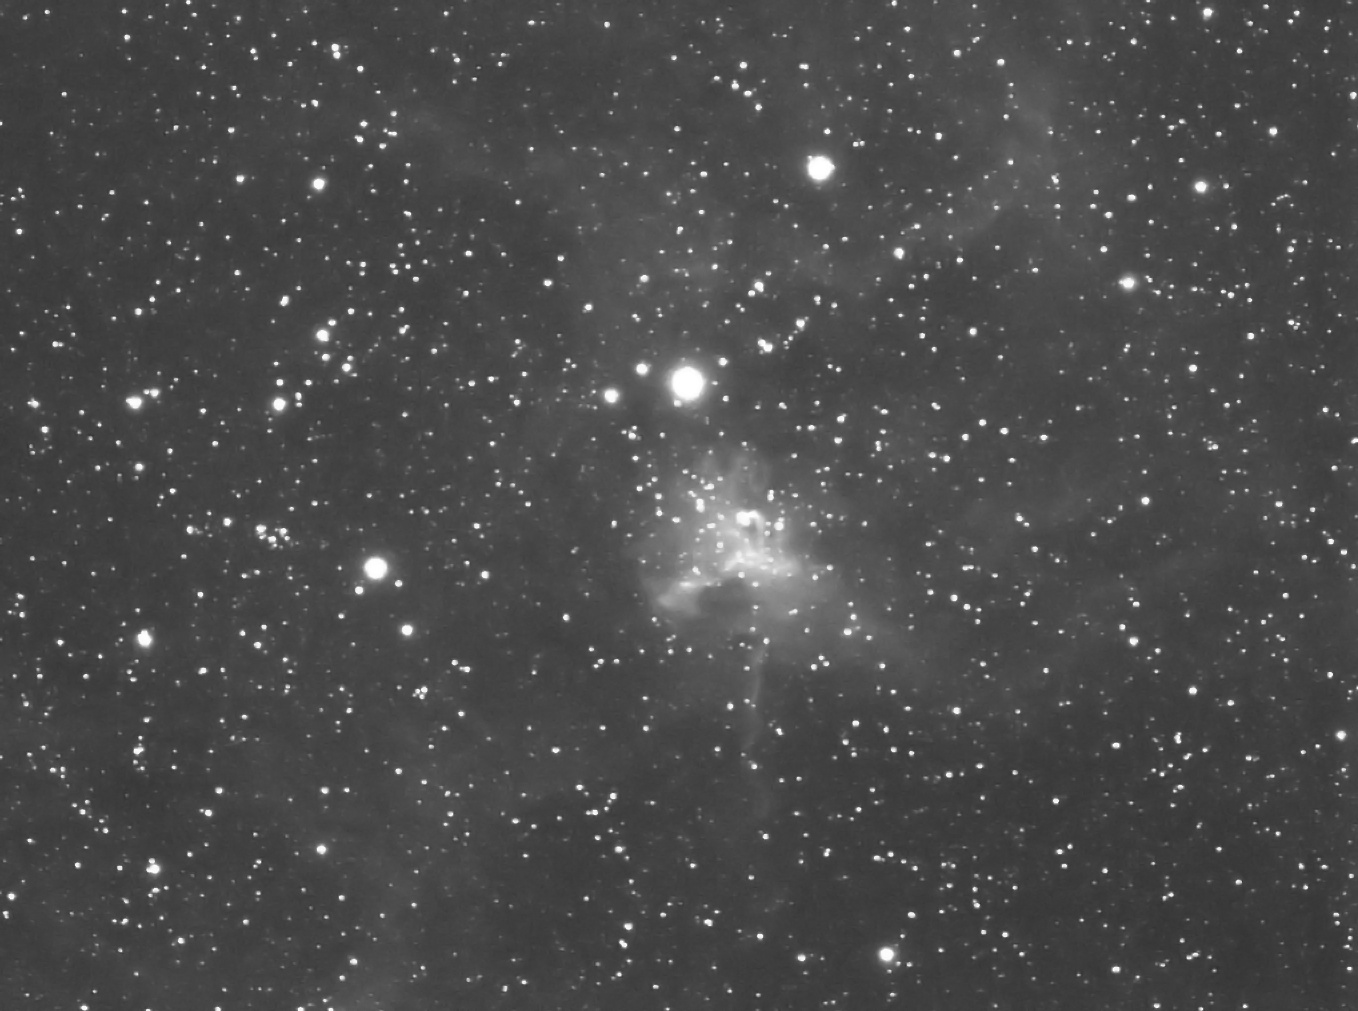 L'amas ouvert IC 417